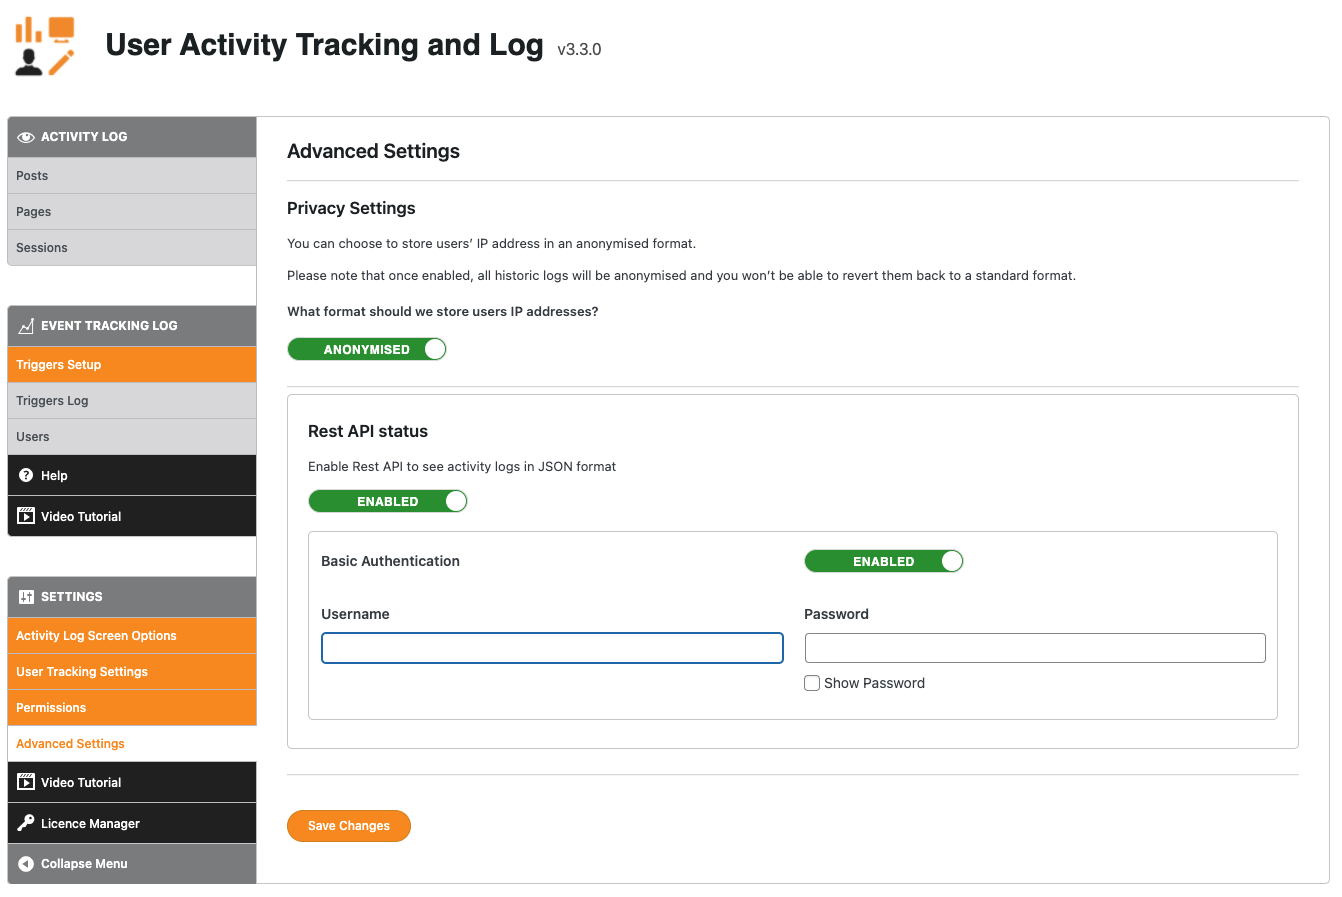 User Activity Tracking and Log - Event Tracking Log - Triggers Setup [Premium]